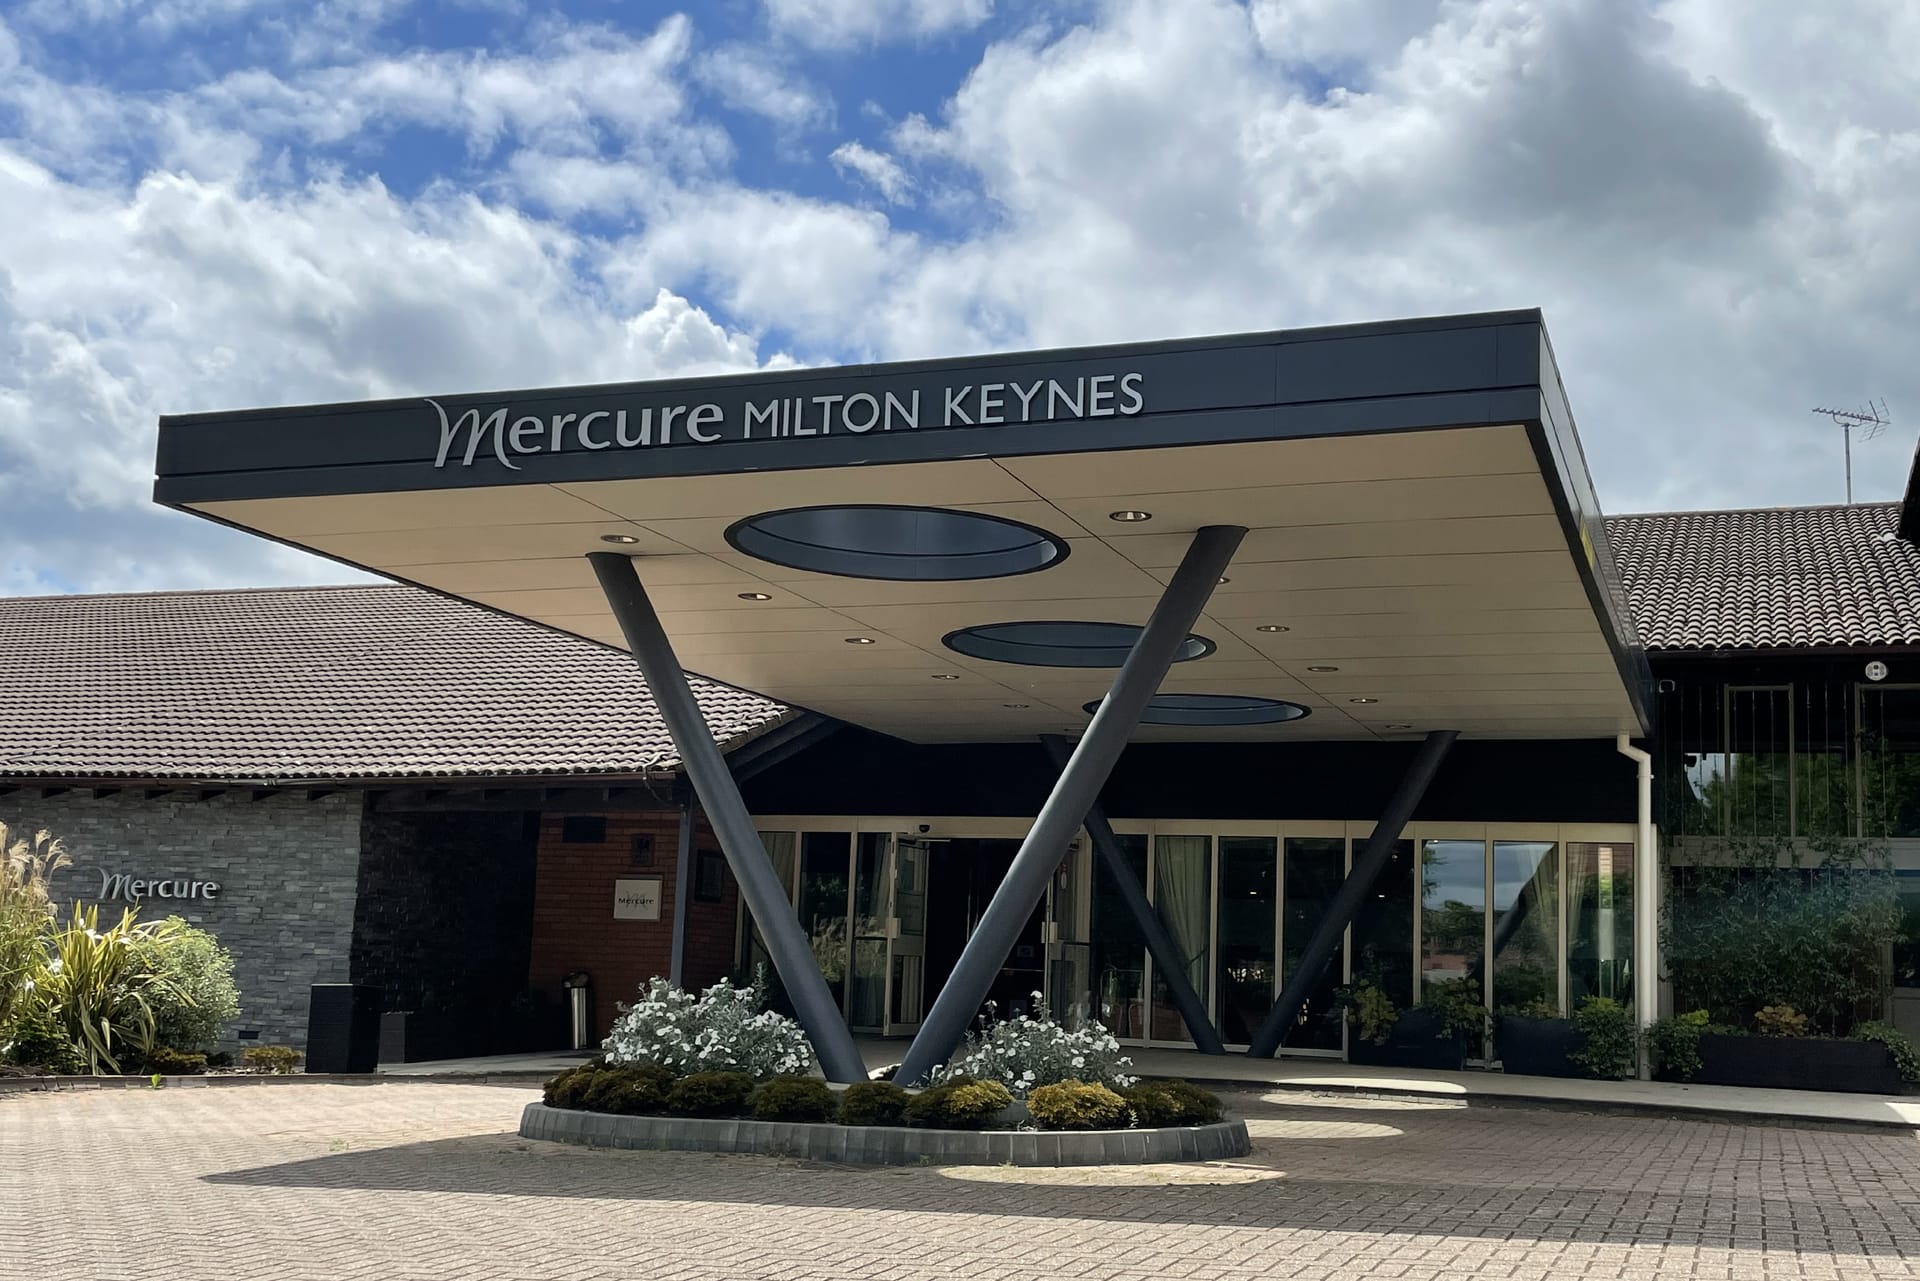 Mercure MK Hotel Entrance